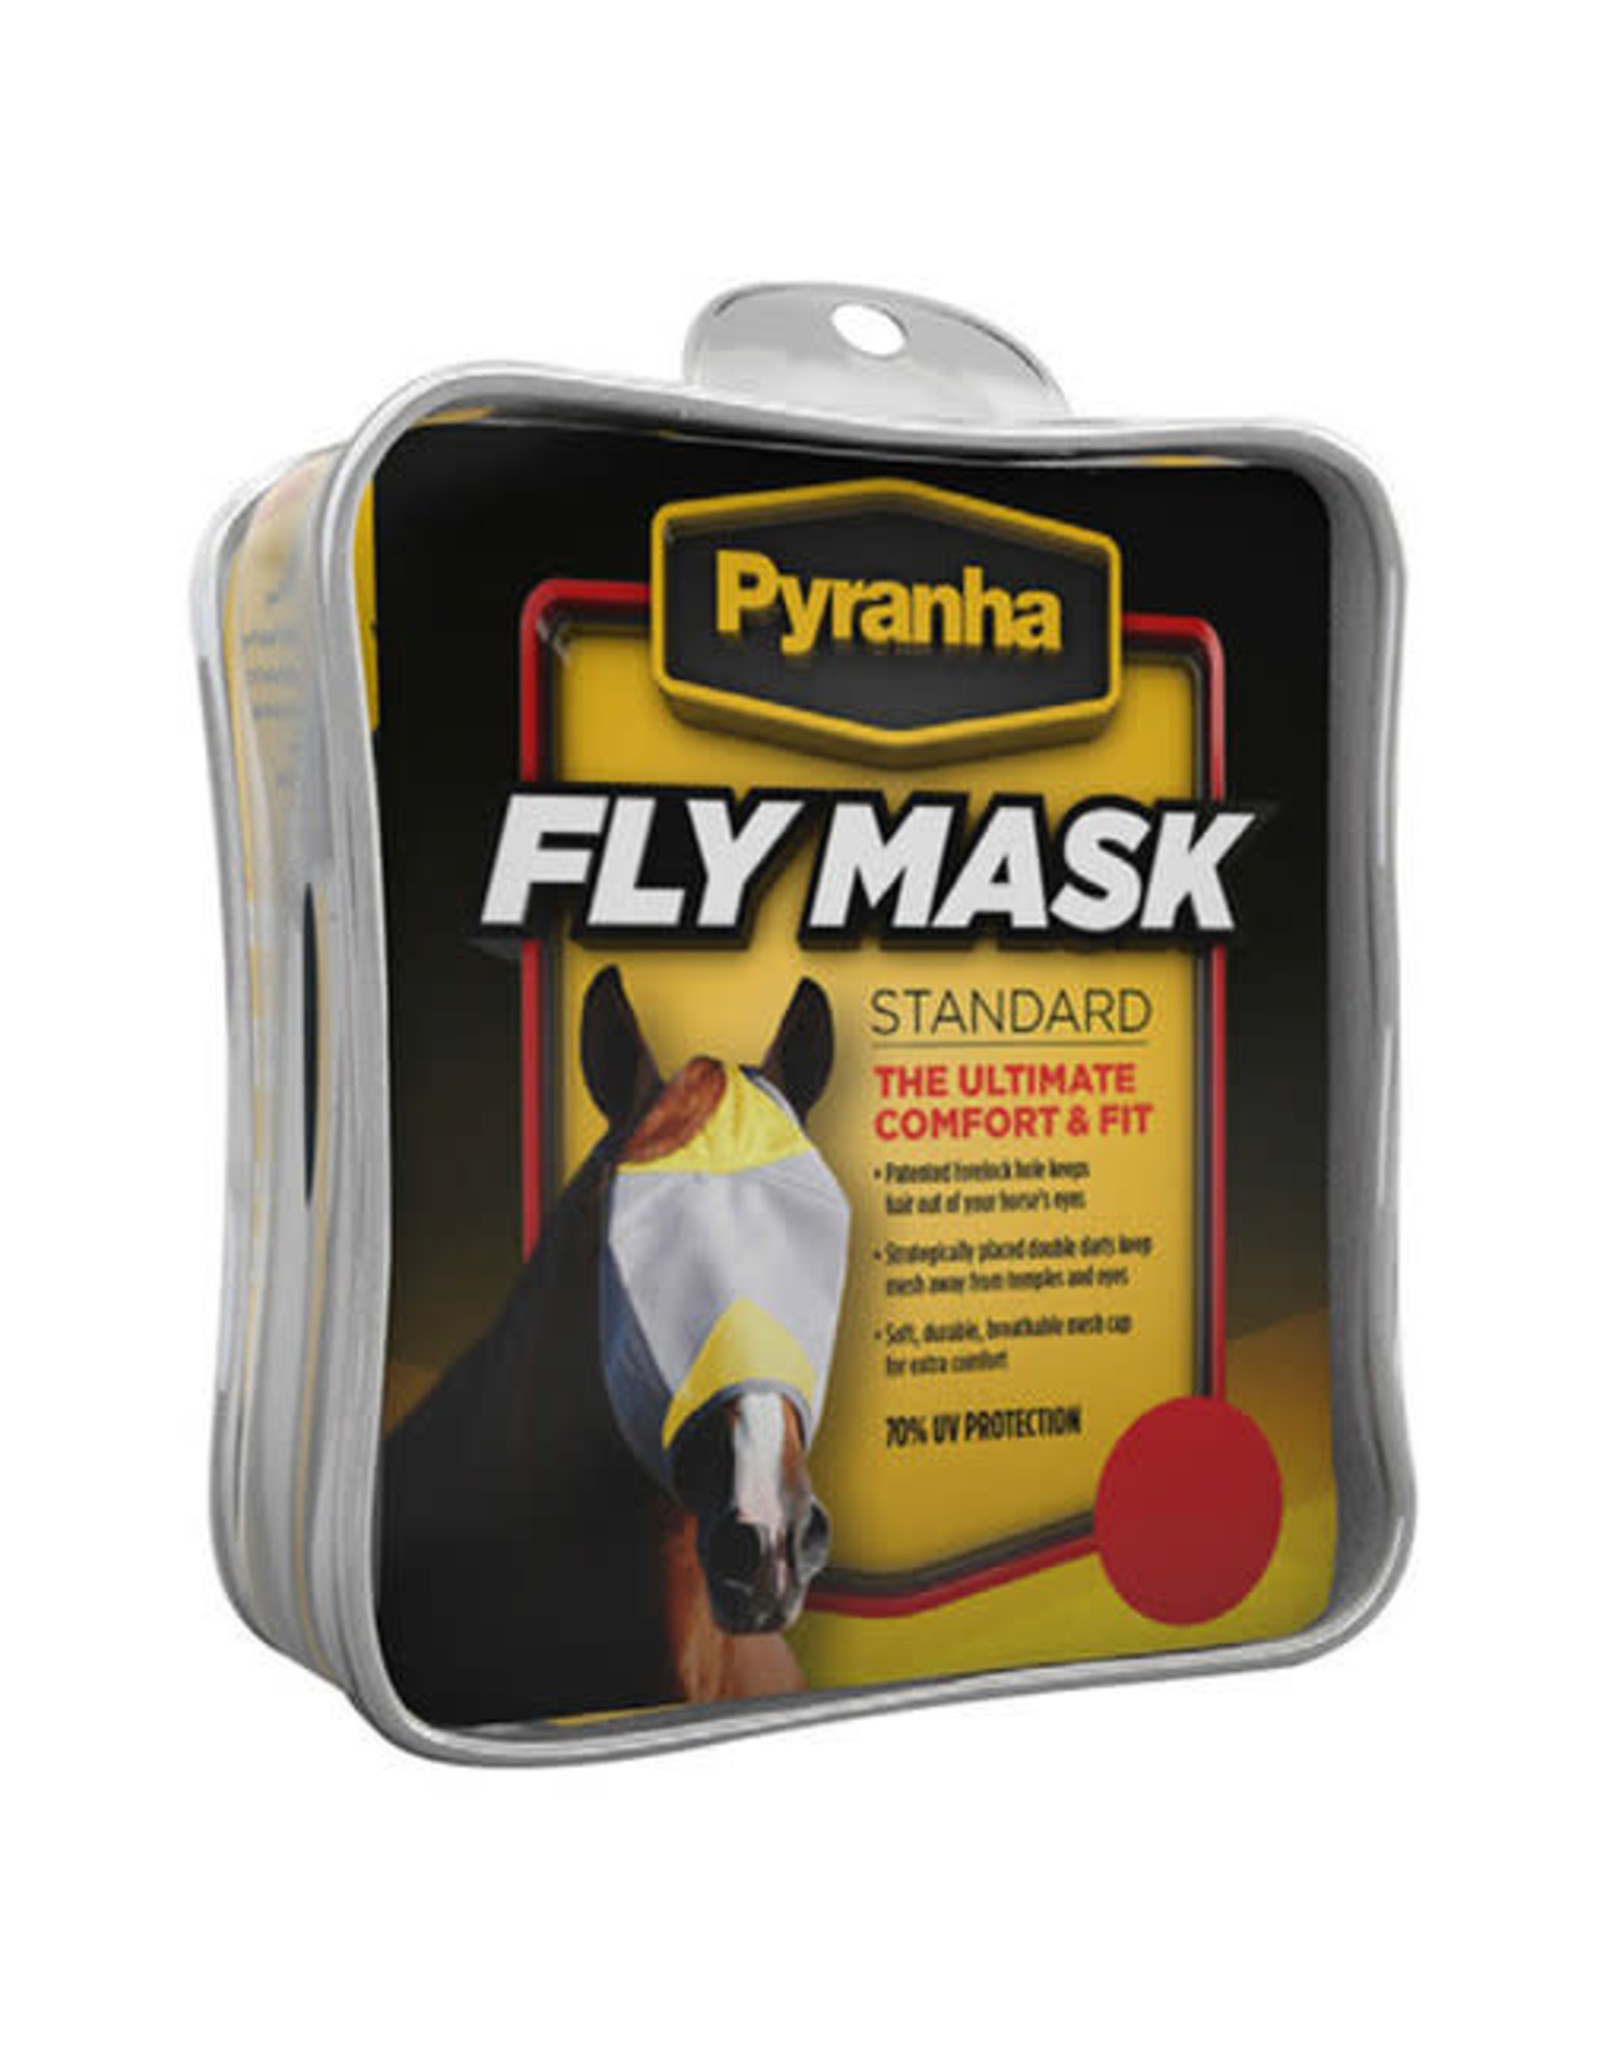 Pyranha Fly Mask